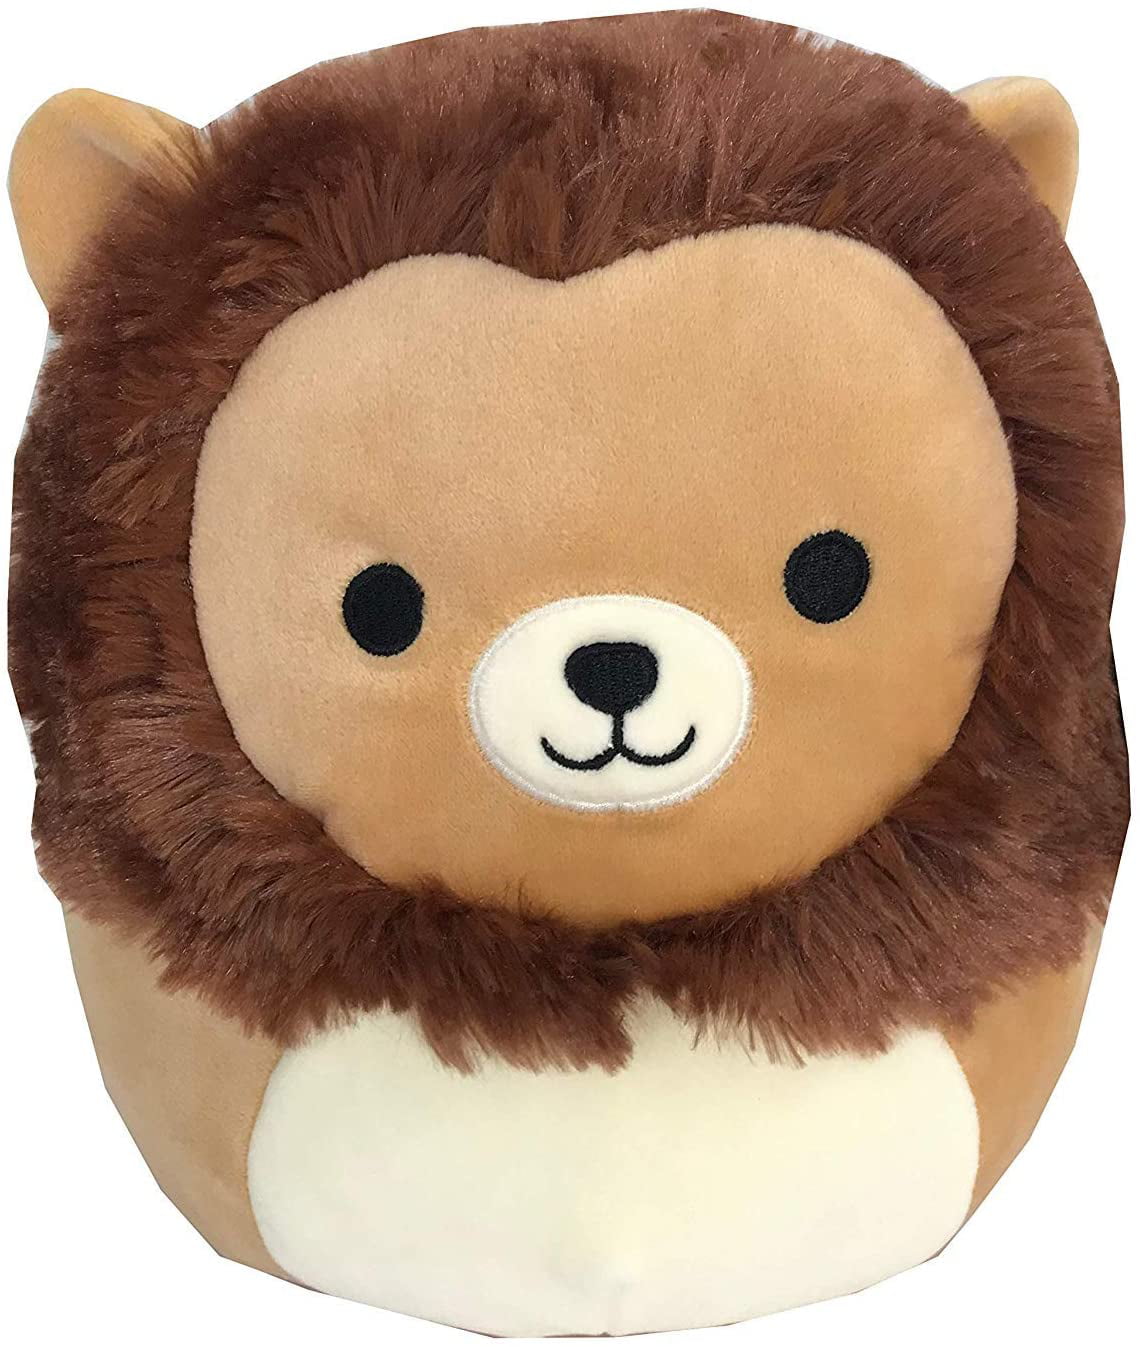 Lion Pillow Pet From Kellytoy Lion Pillow Plush Doll 16" New 